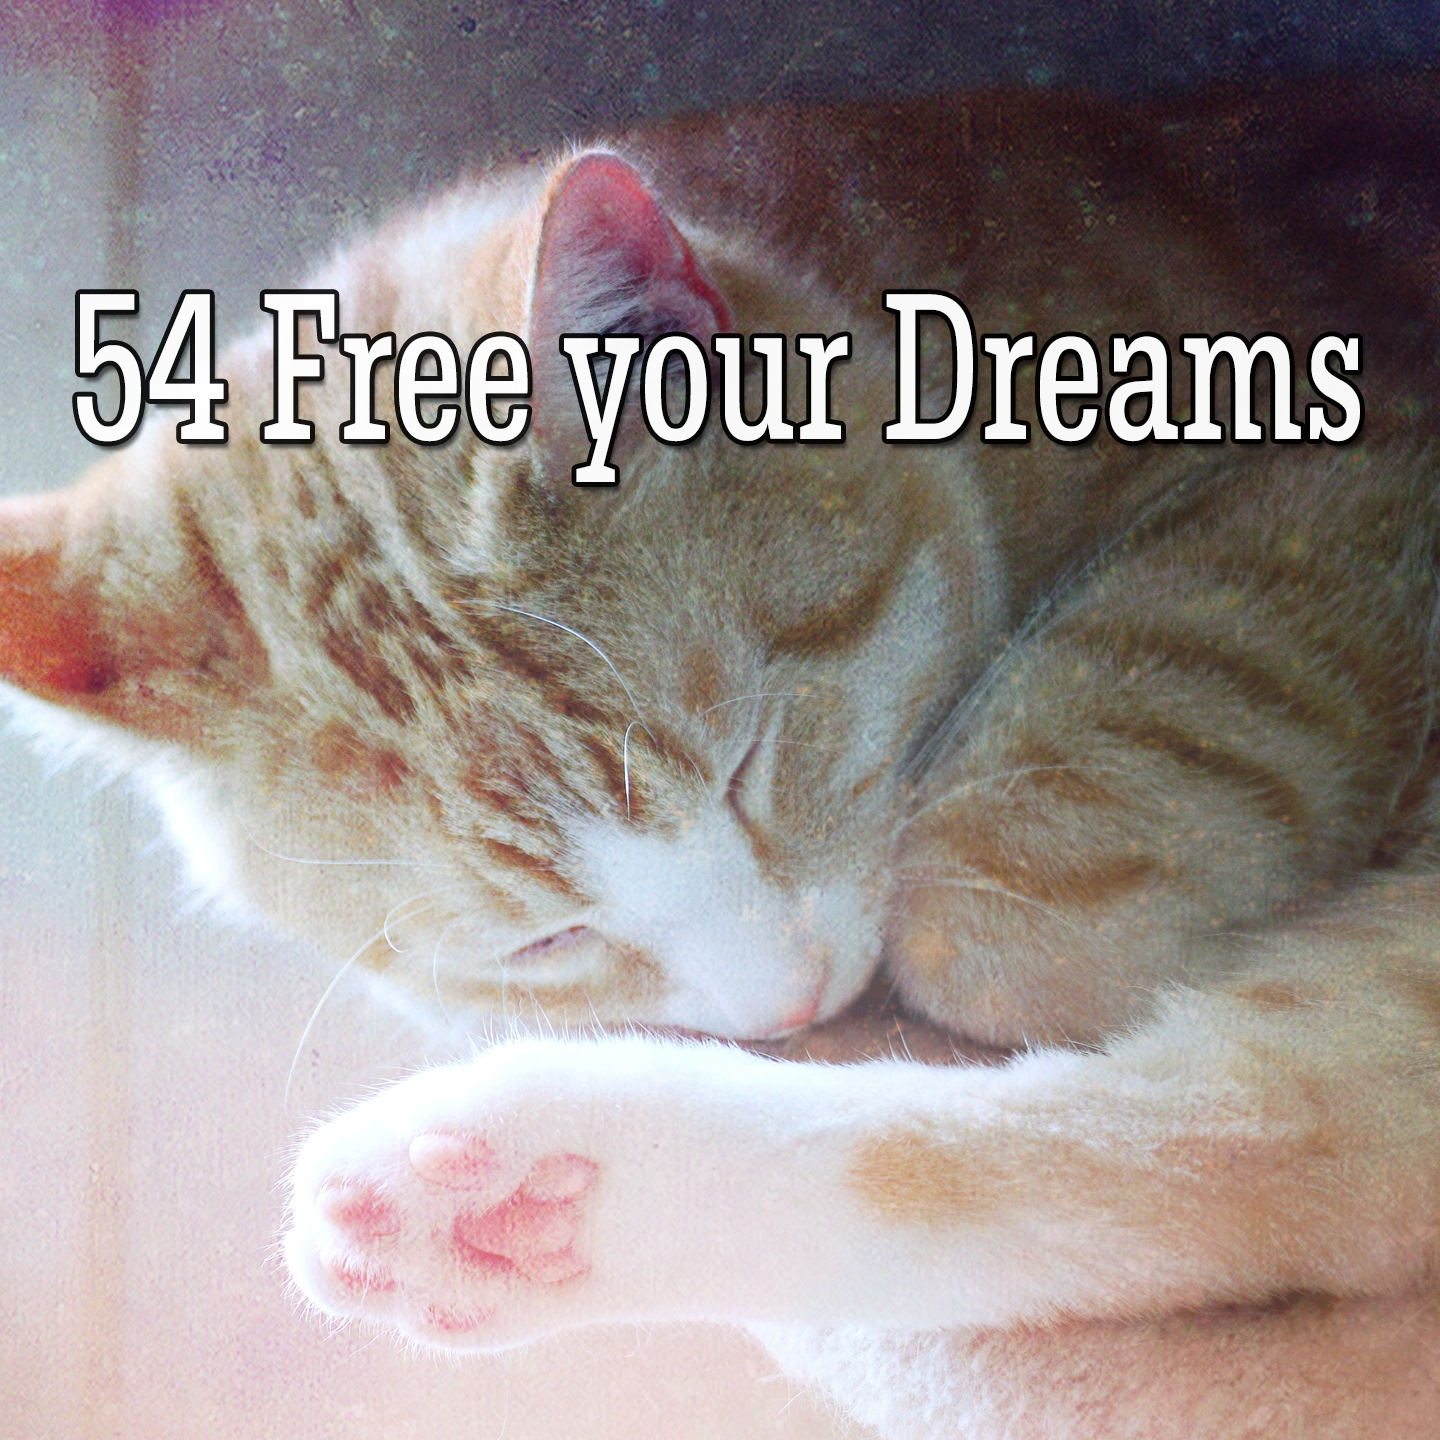 54 Free your Dreams